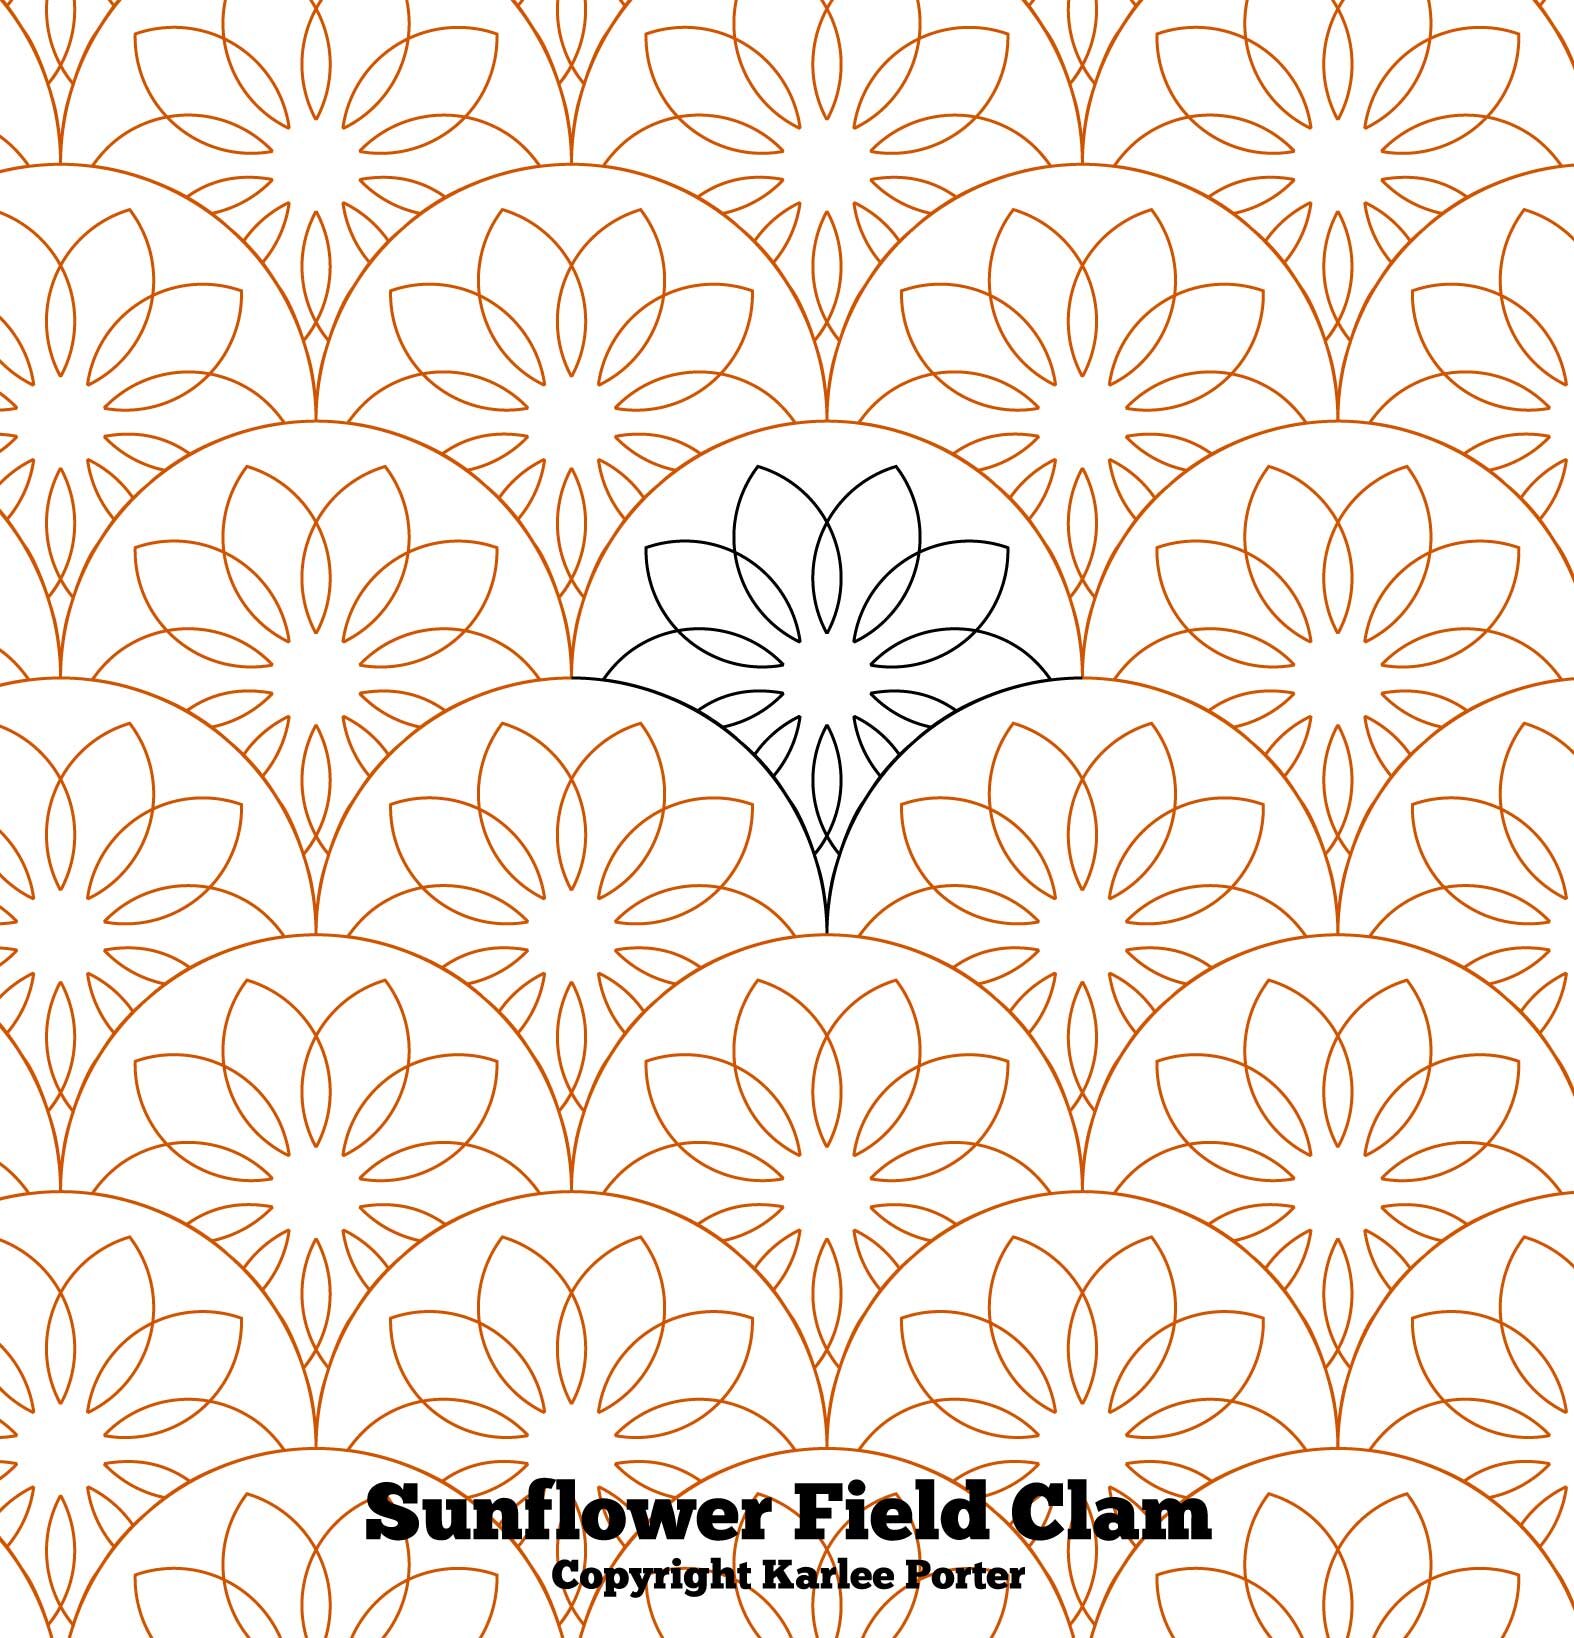 Sunflower Field Clam